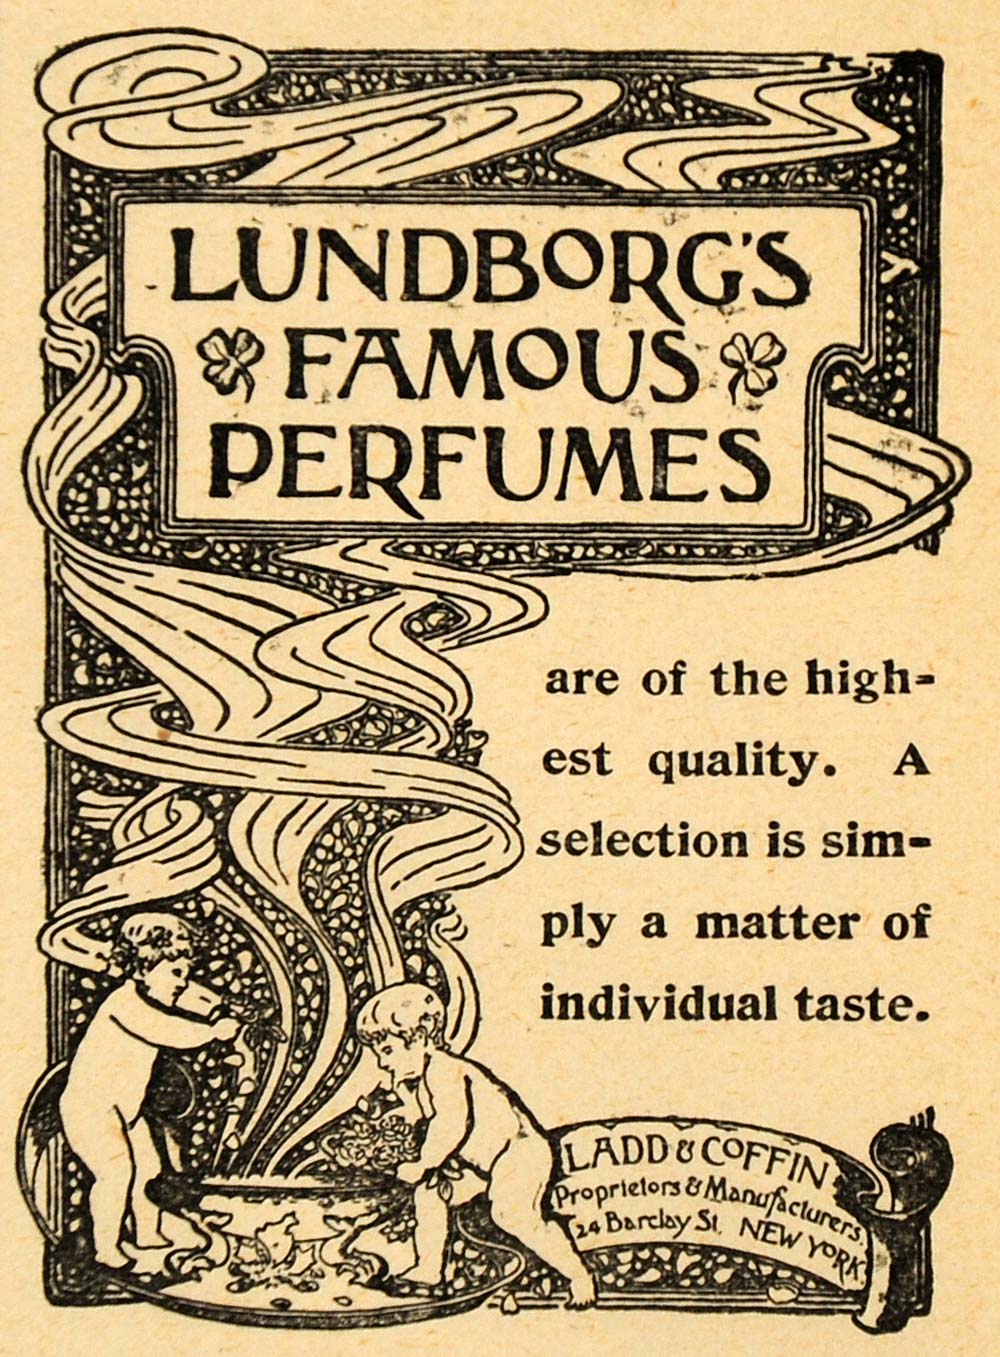 1893 Ad Ladd & Coffin Lundborg's Famous Perfumes NY 14 Barclay st cherub LHJ4